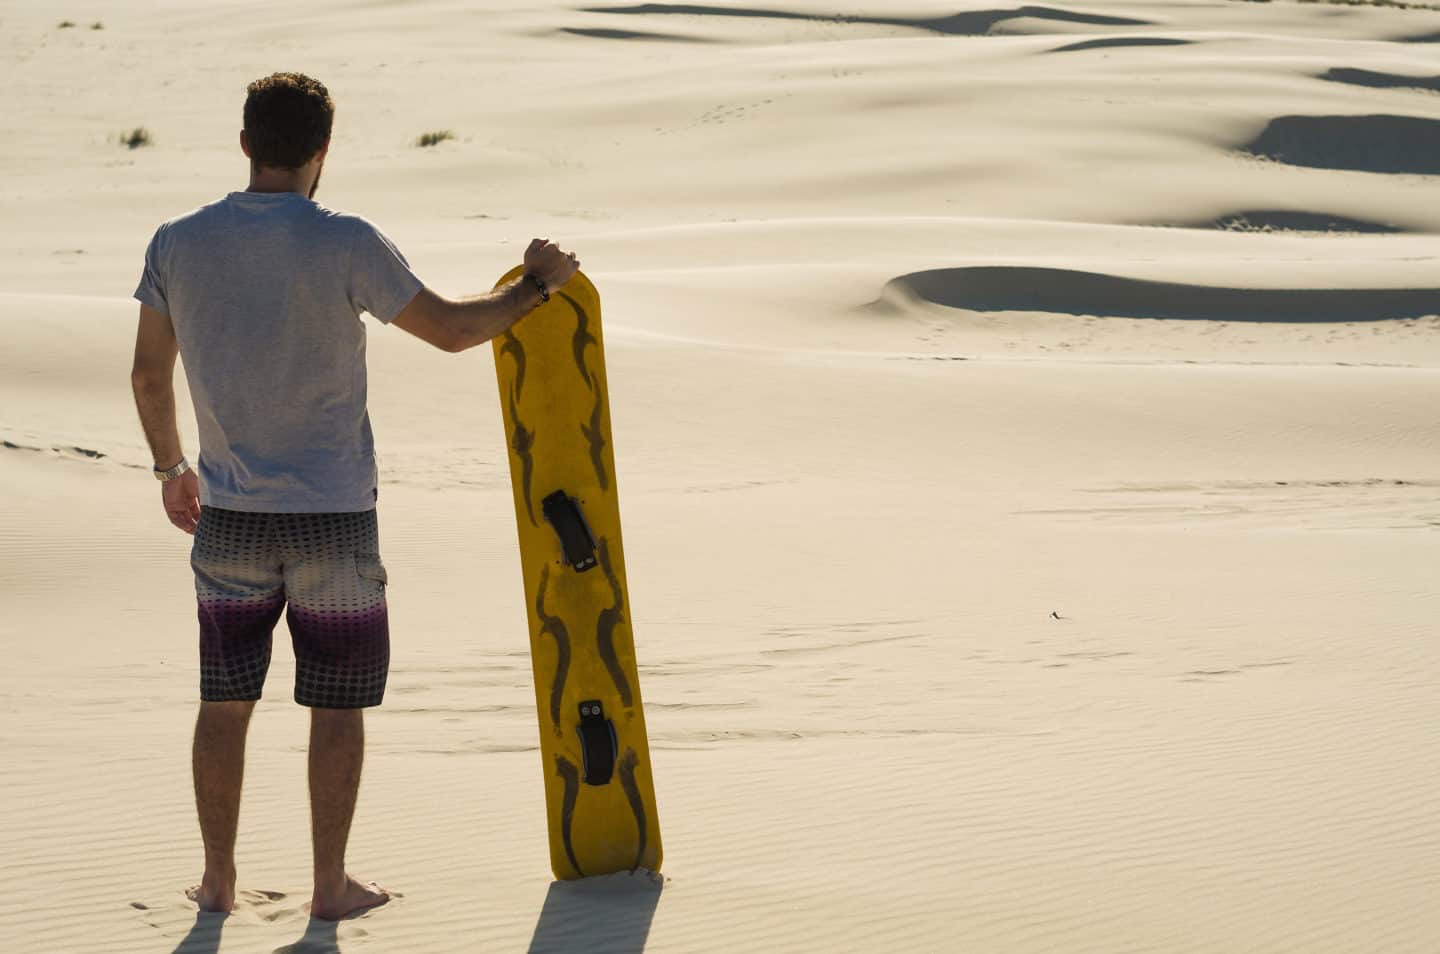  sand dunes dubai | sand surfing | abu dhabi sand boarding | dubai sand | sand in dubai | sand dune boarding | sandboarding | sand snowboarding